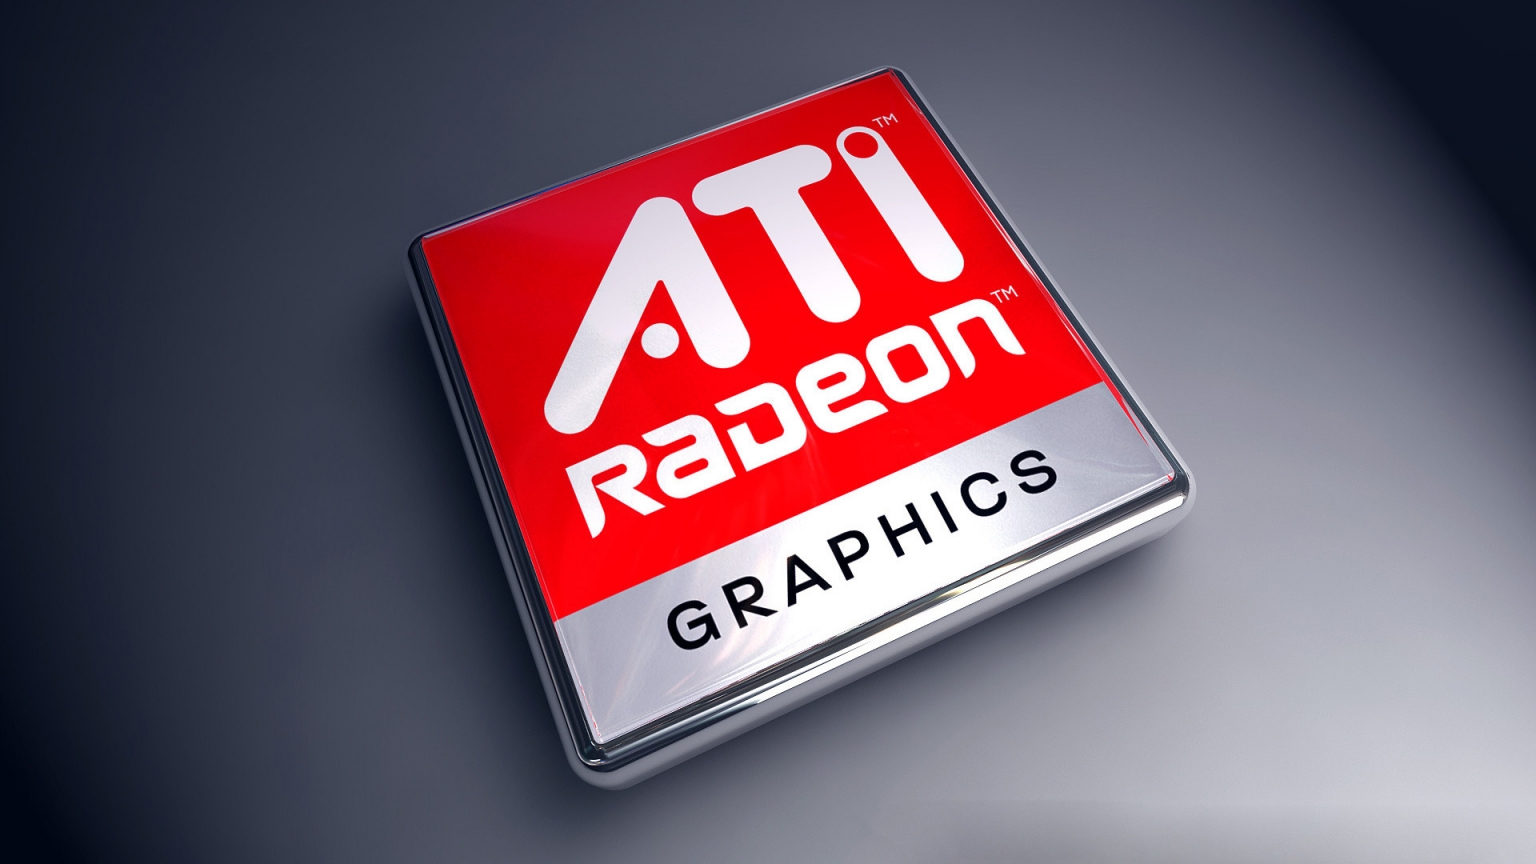 ATI Radeon Graphics for 1536 x 864 HDTV resolution